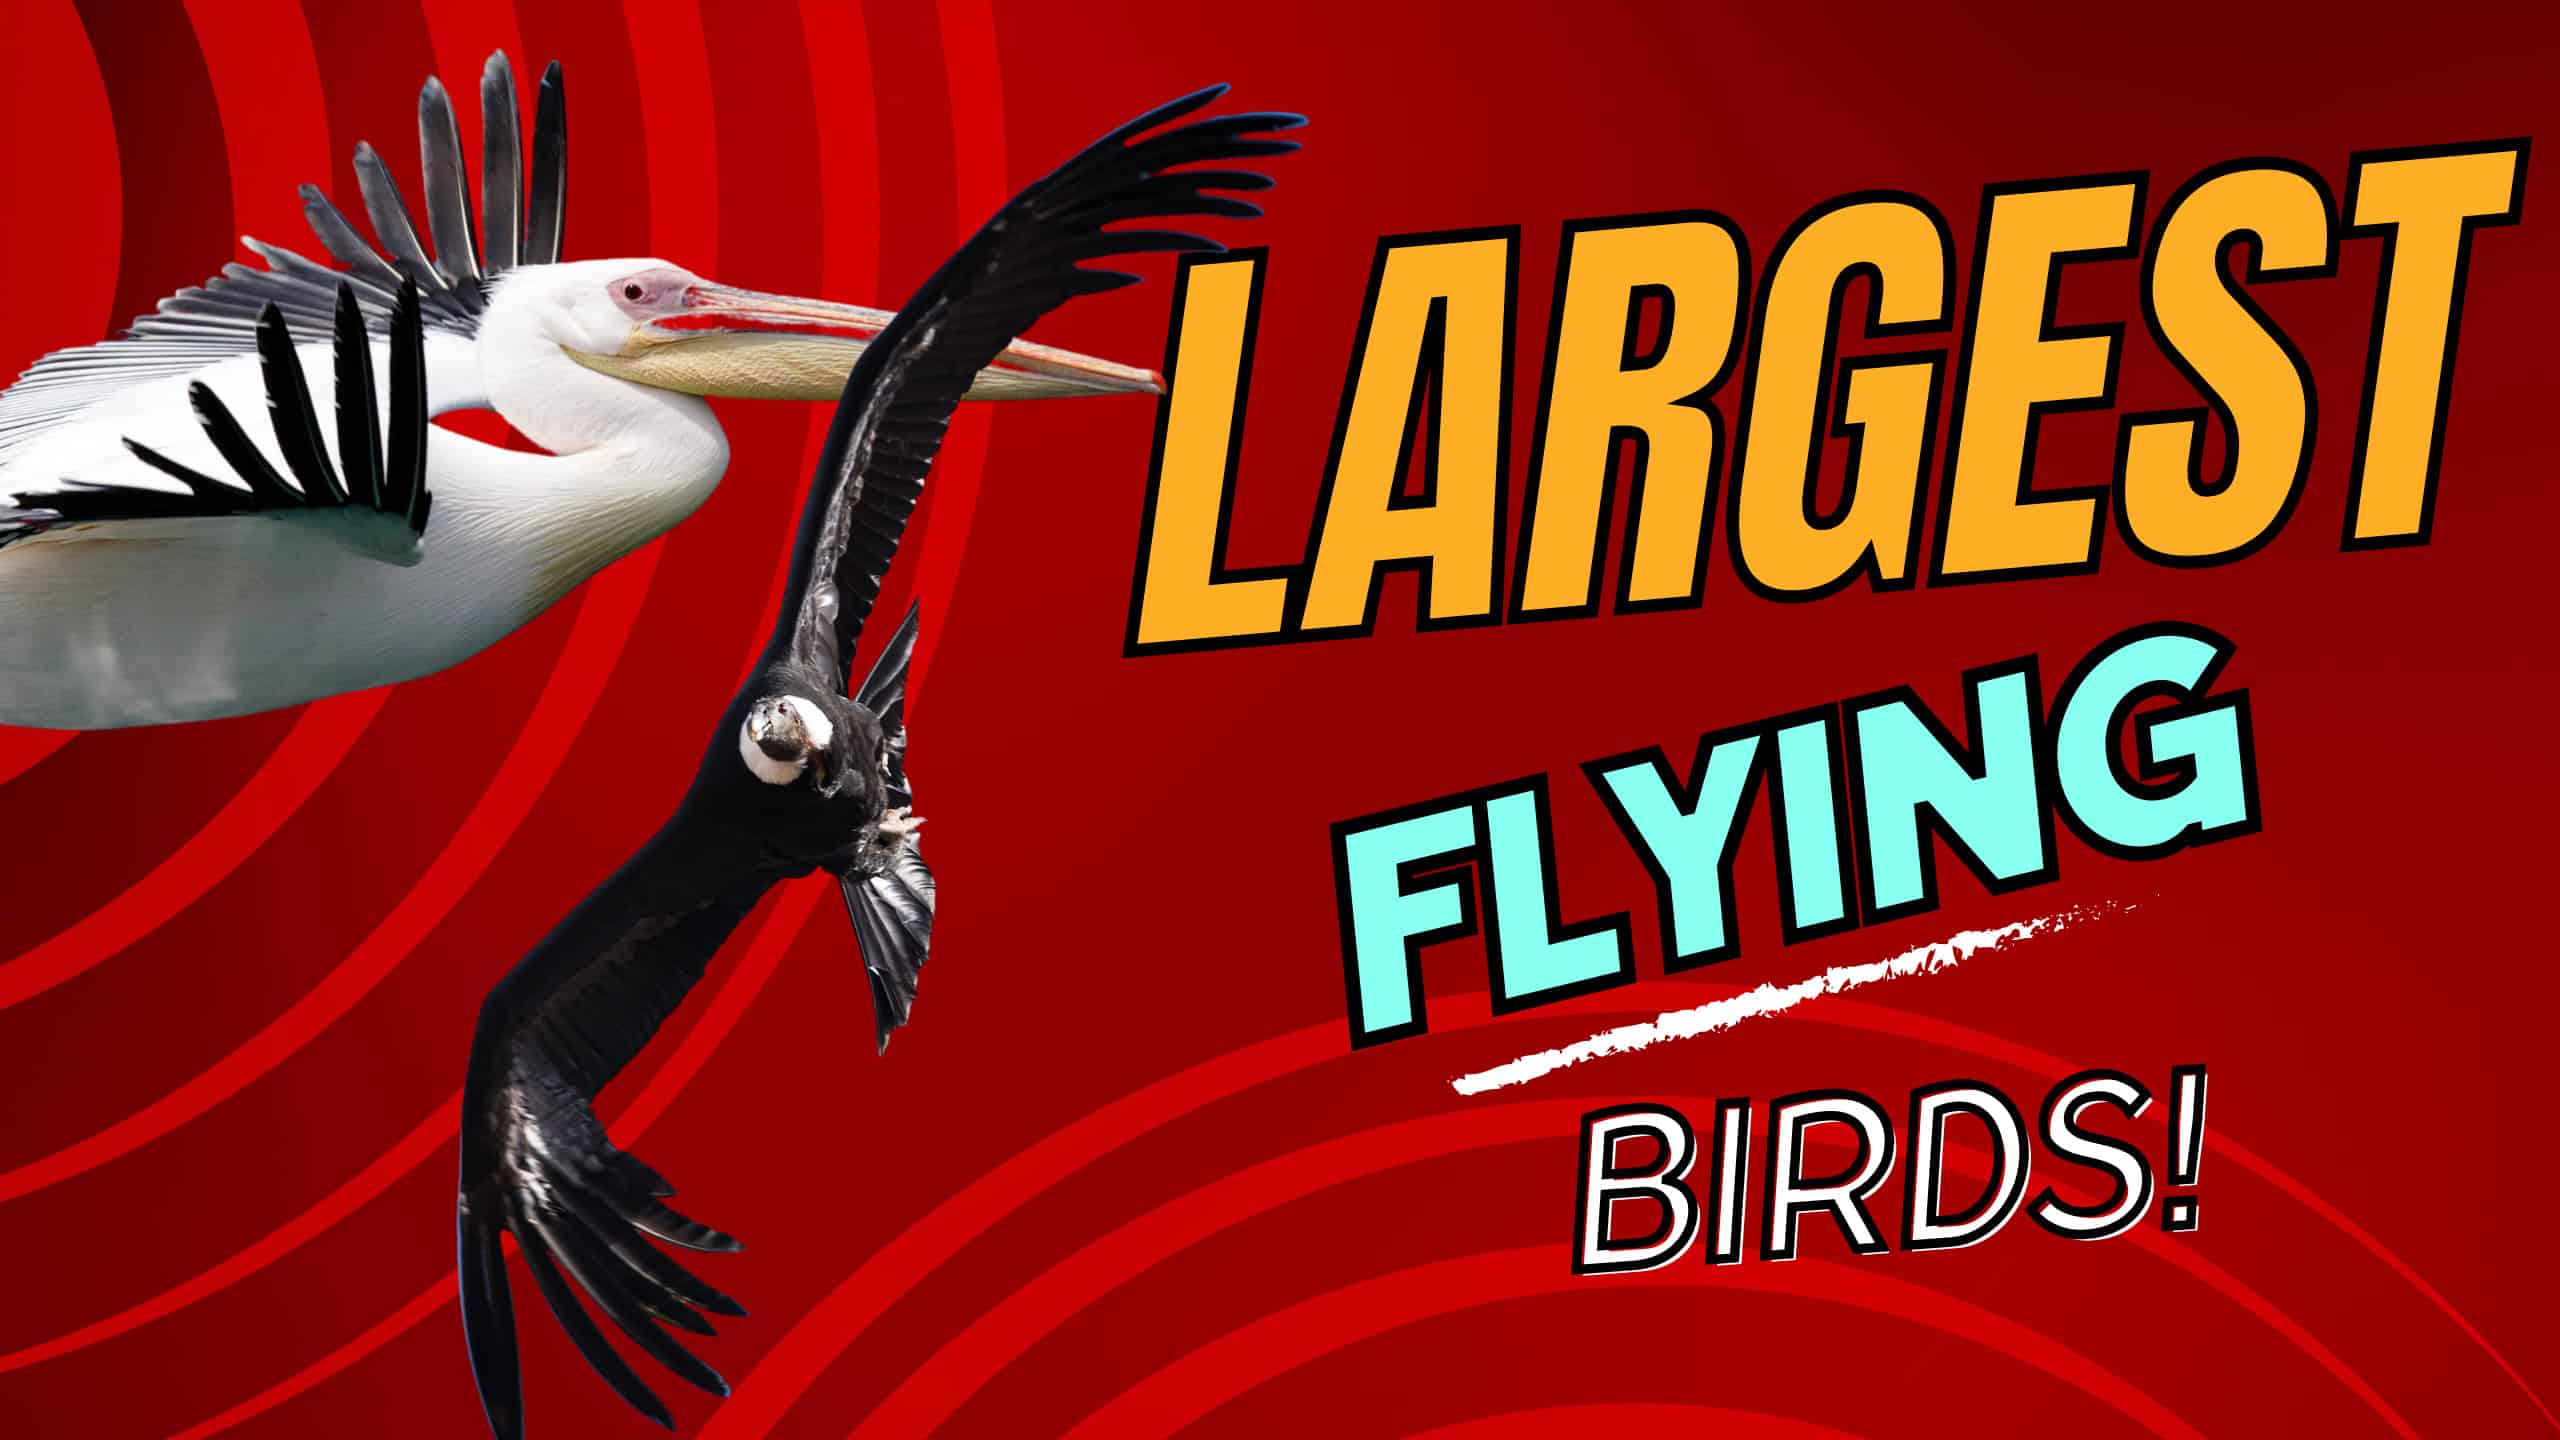 Largest Birds